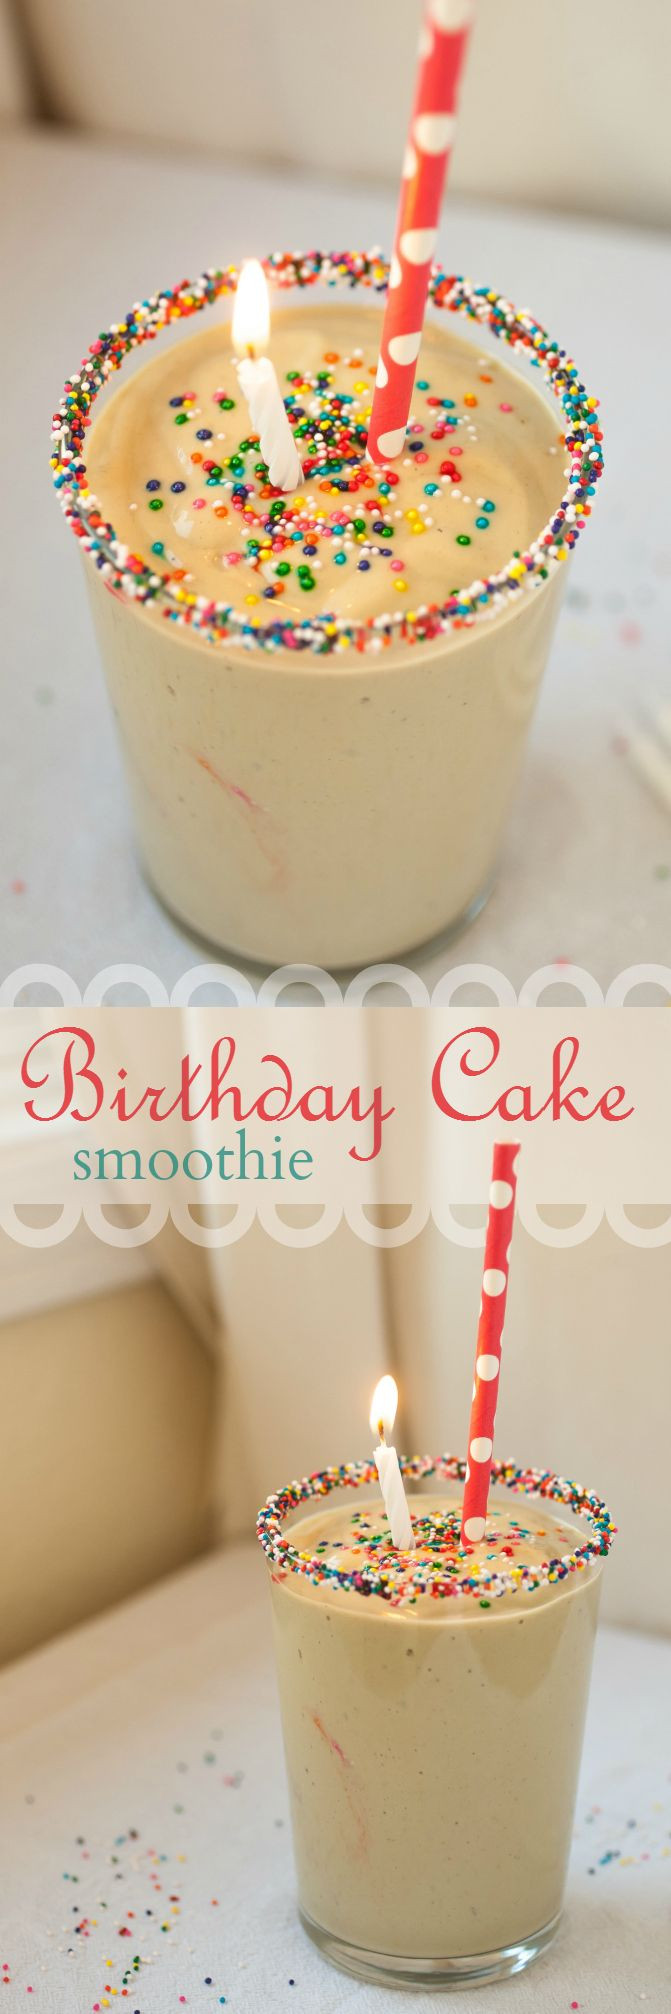 Healthy Birthday Desserts
 Best 25 Healthy birthday cakes ideas on Pinterest